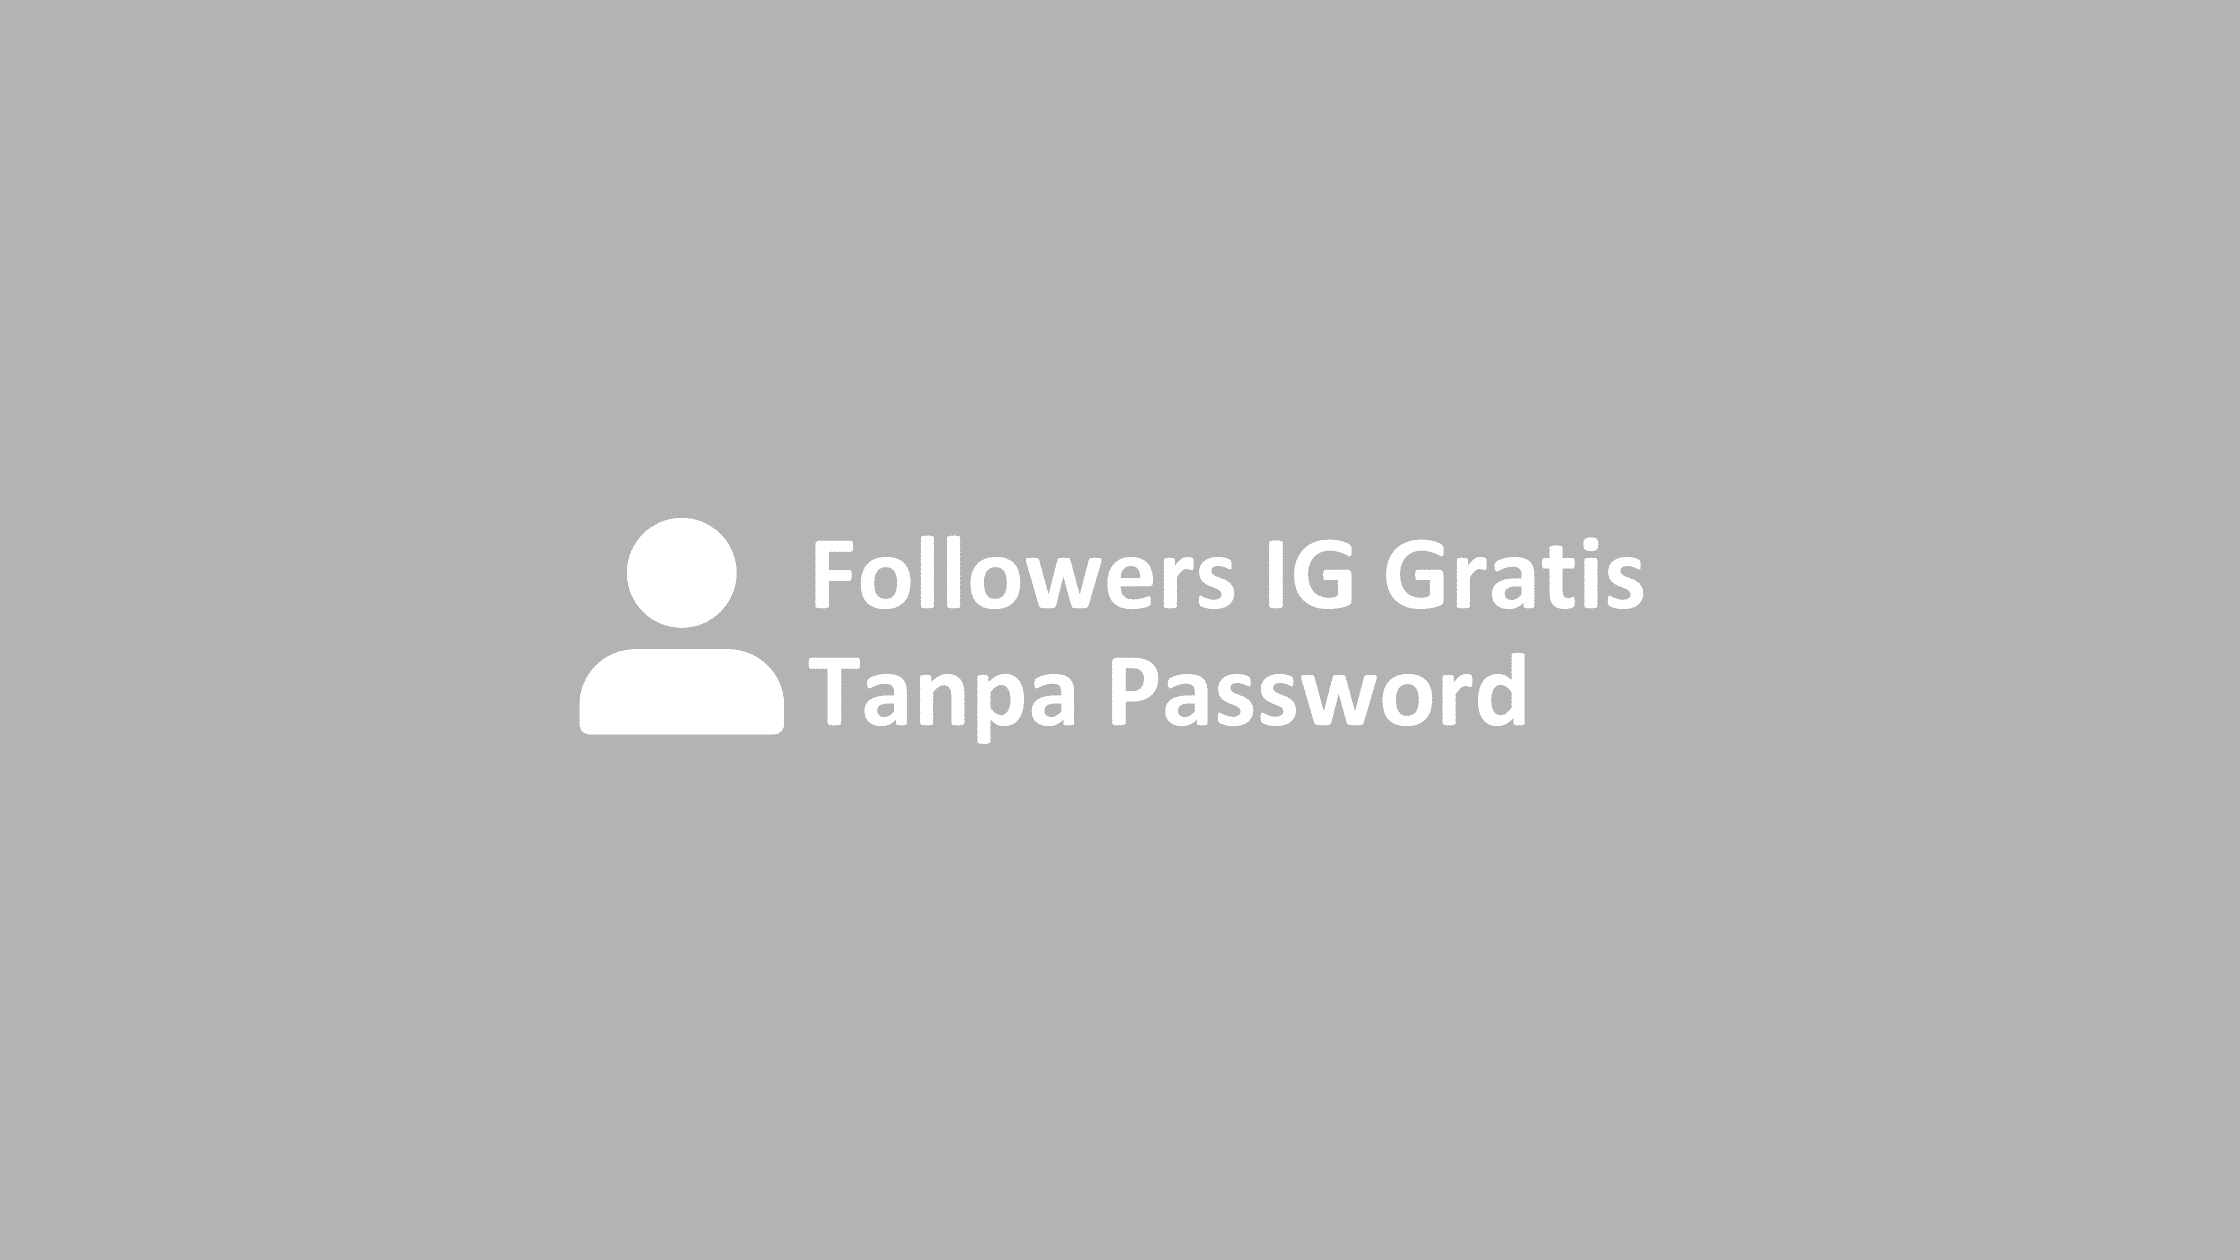 Follower Ig Gratis Tanpa Password. Followers Instagram Gratis Aman Tanpa Password